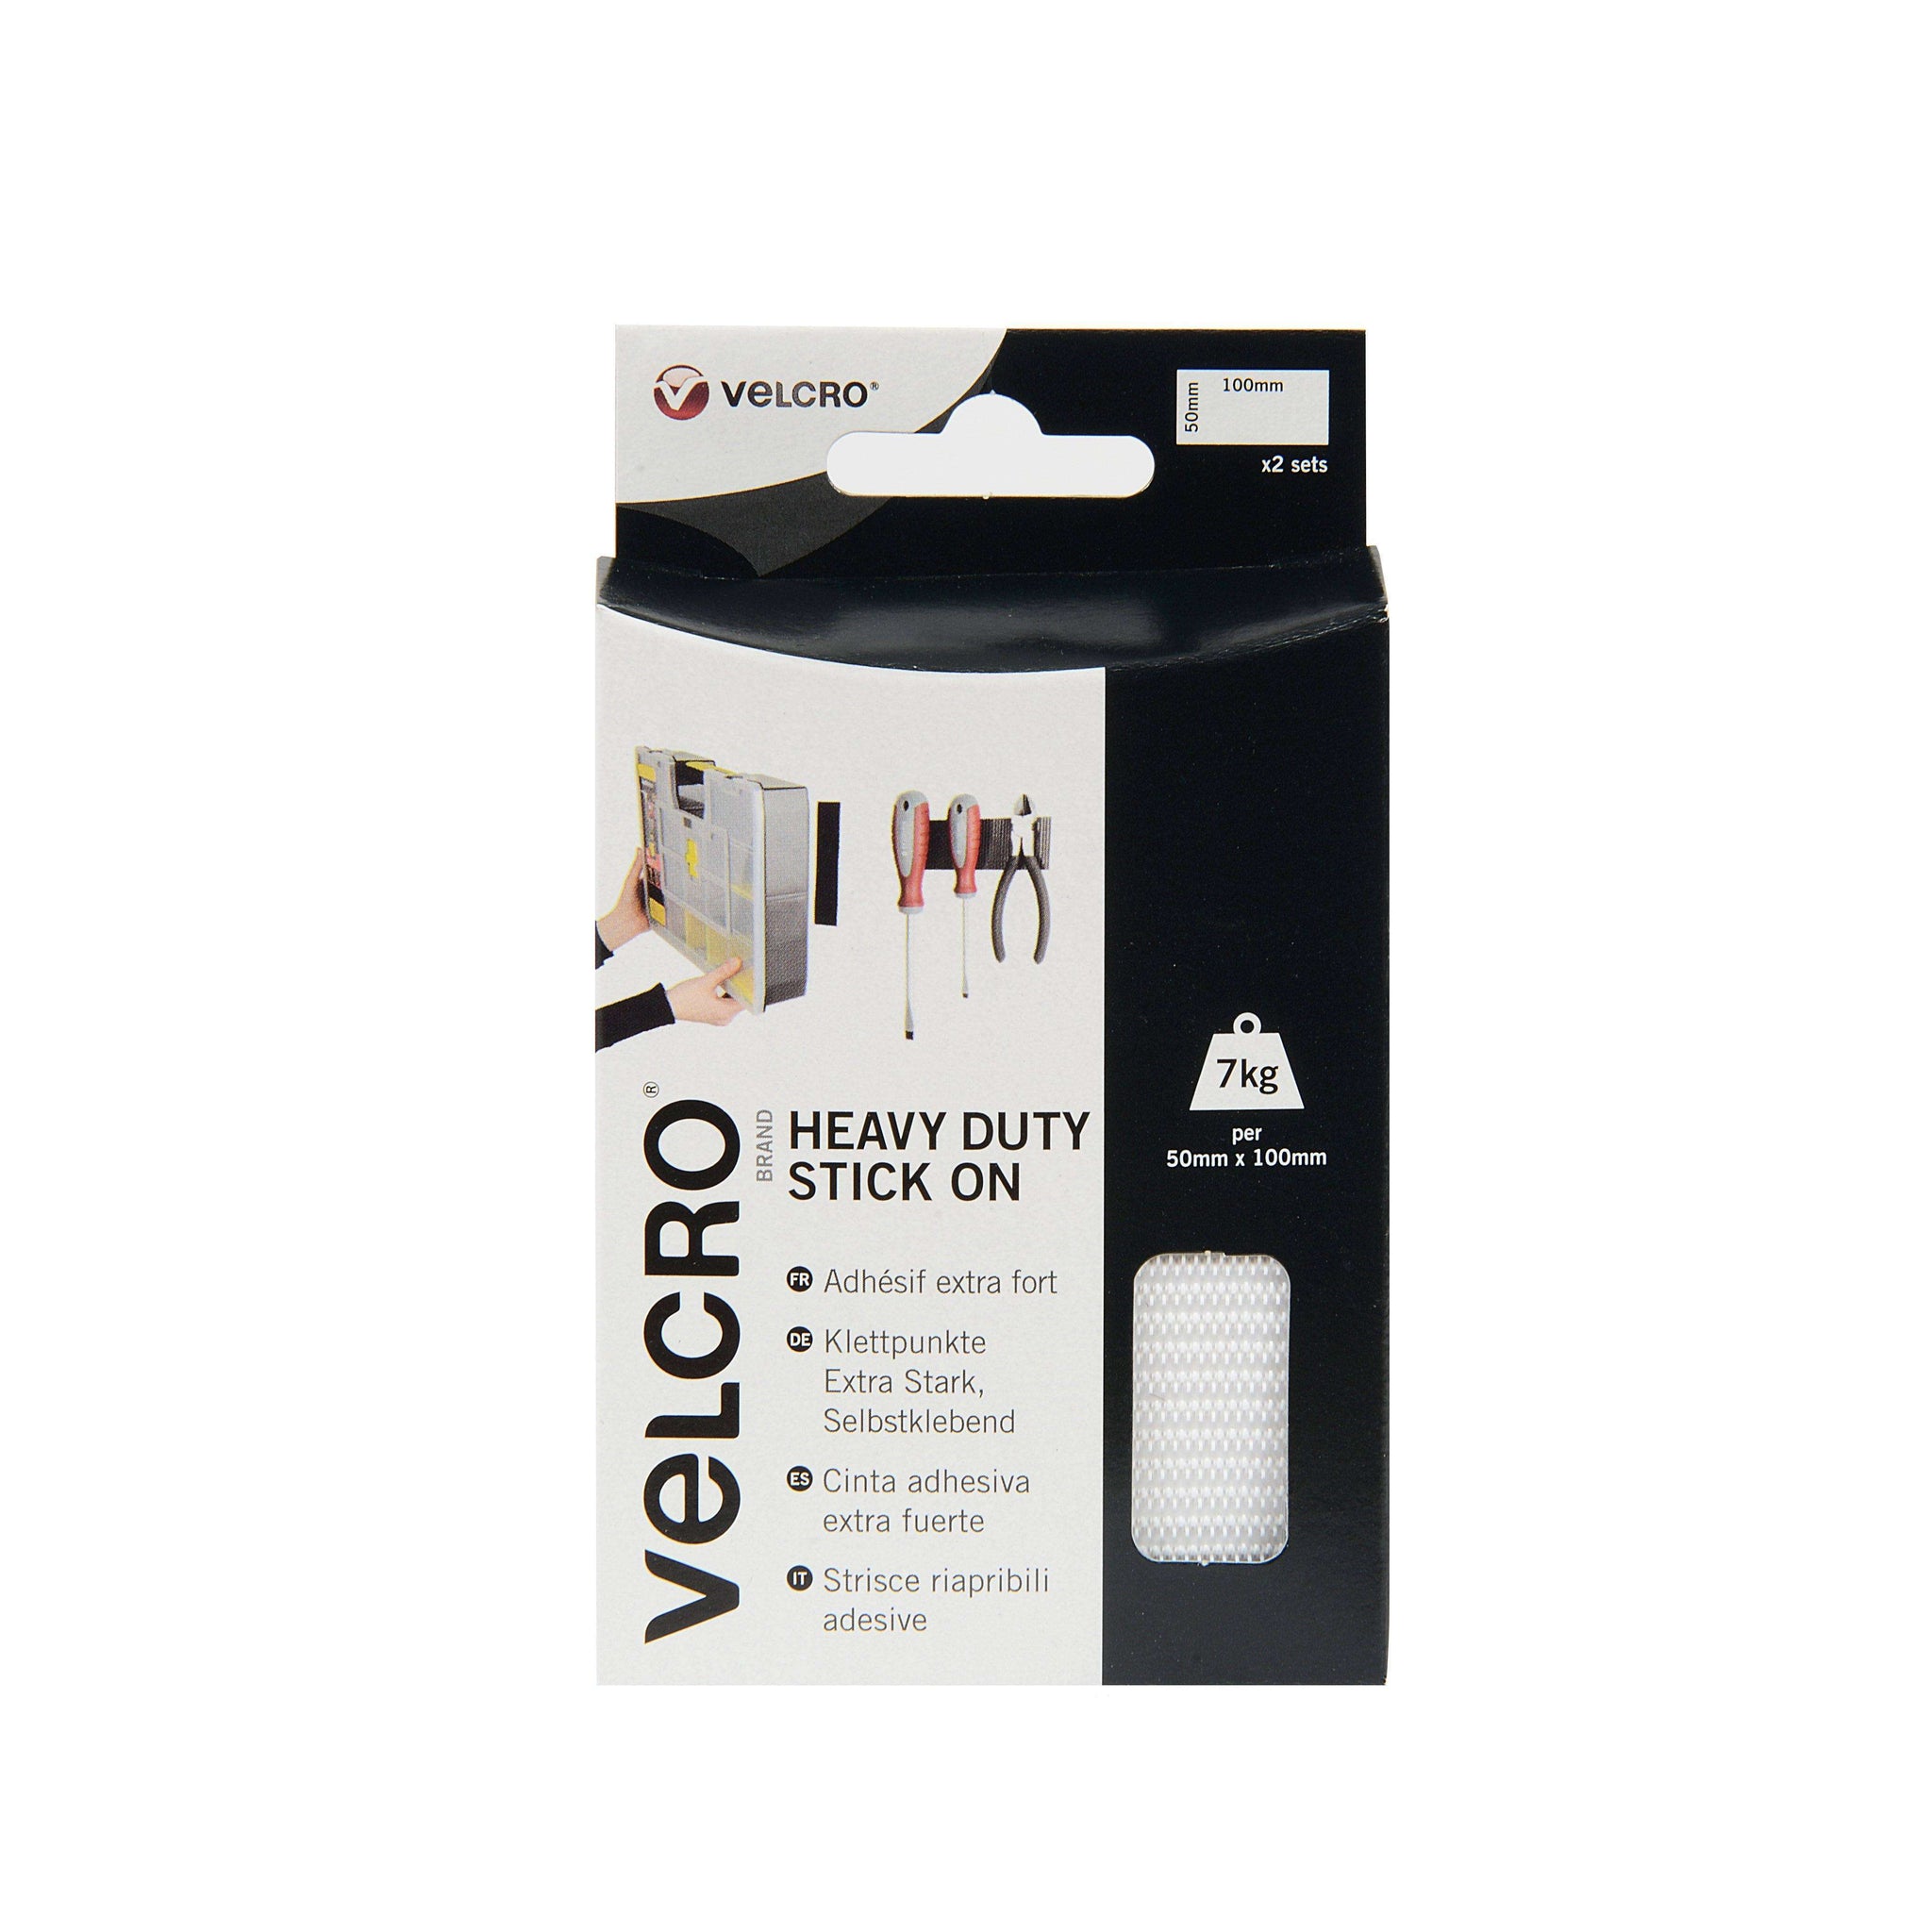 VELCRO Brand Industrial Strength Tape 4 x 2 White Pack Of 3 Strips